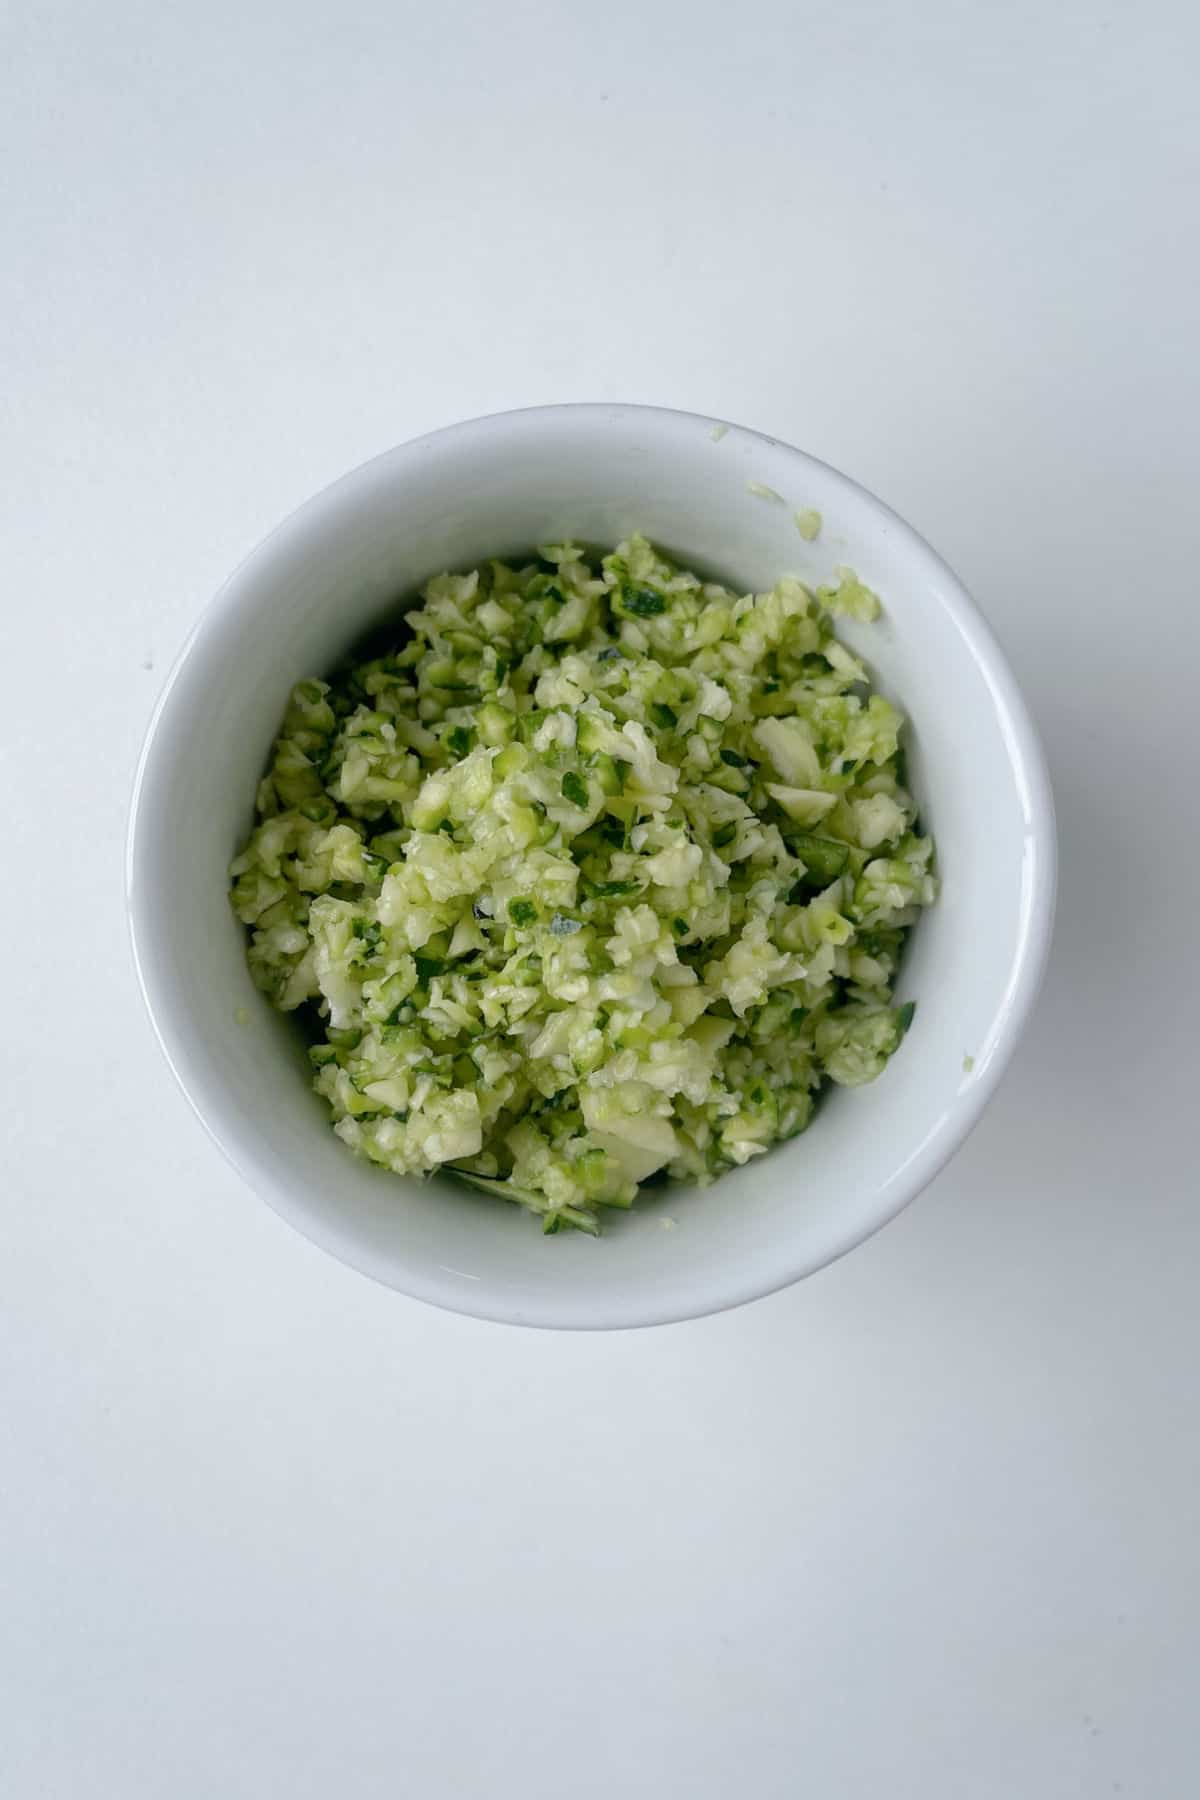 Grated zucchini in a white bowl.